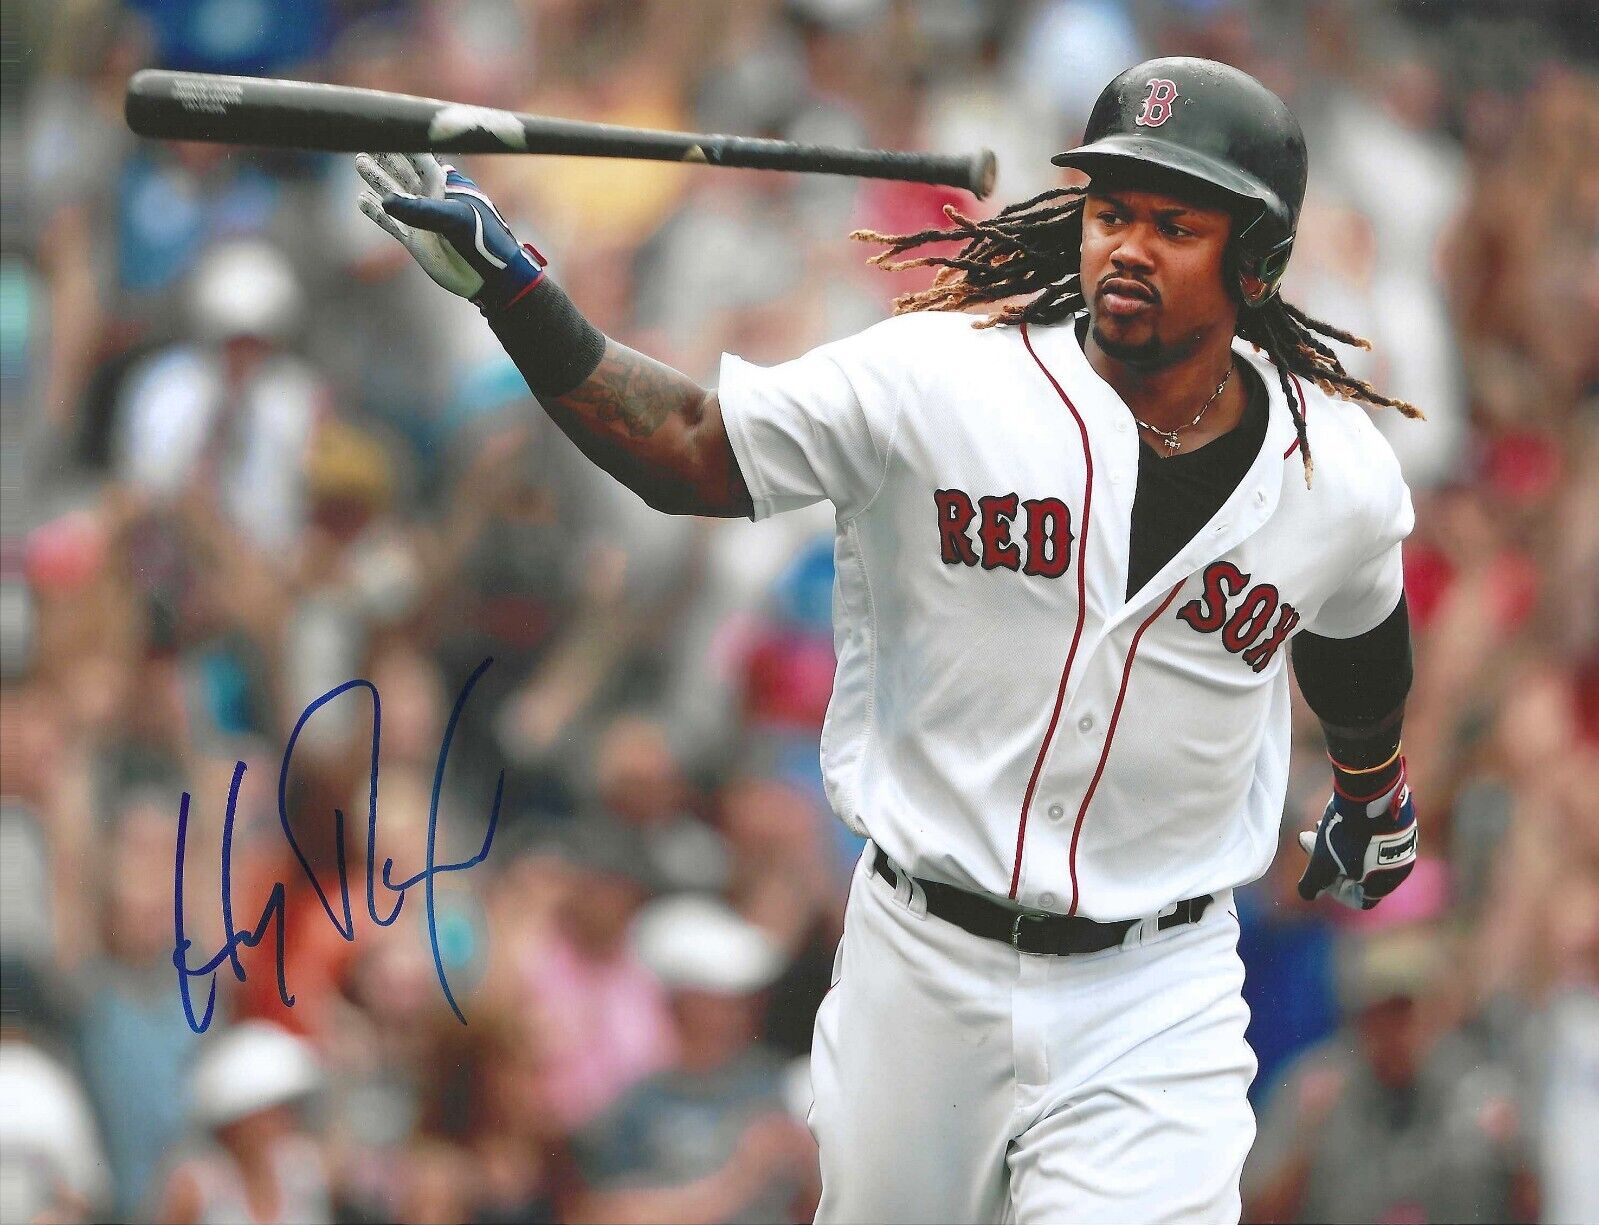 Hanley Ramirez Signed photo 8x10 Autographed Red Sox